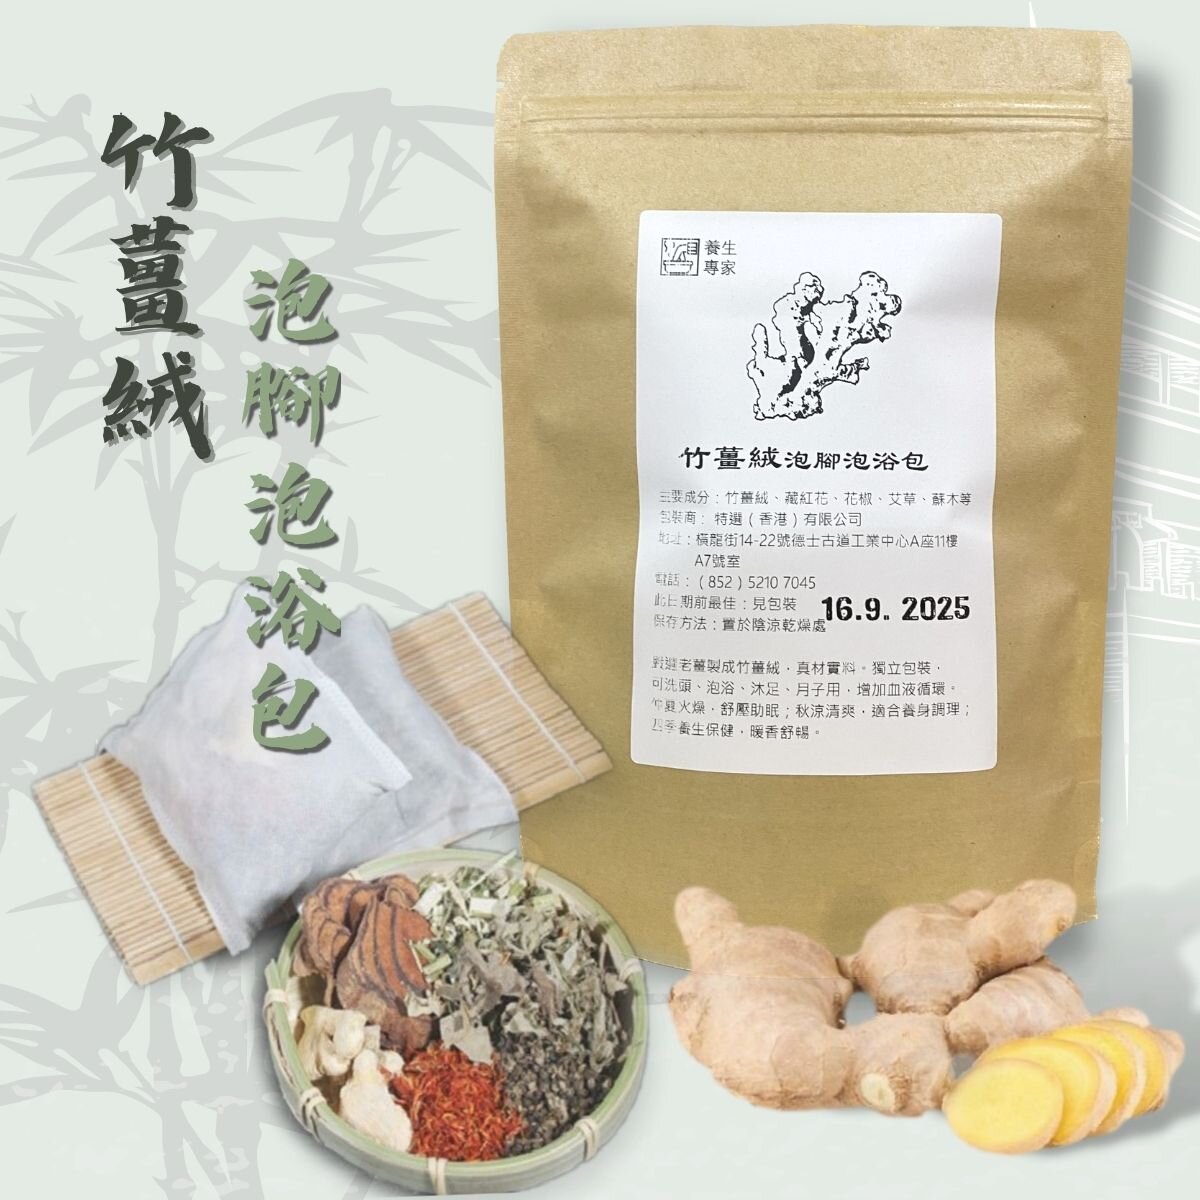 Bamboo ginger fluffy foot bath bag (5 sachets) [Bamboo ginger + saffron + pepper]｜{C0} 